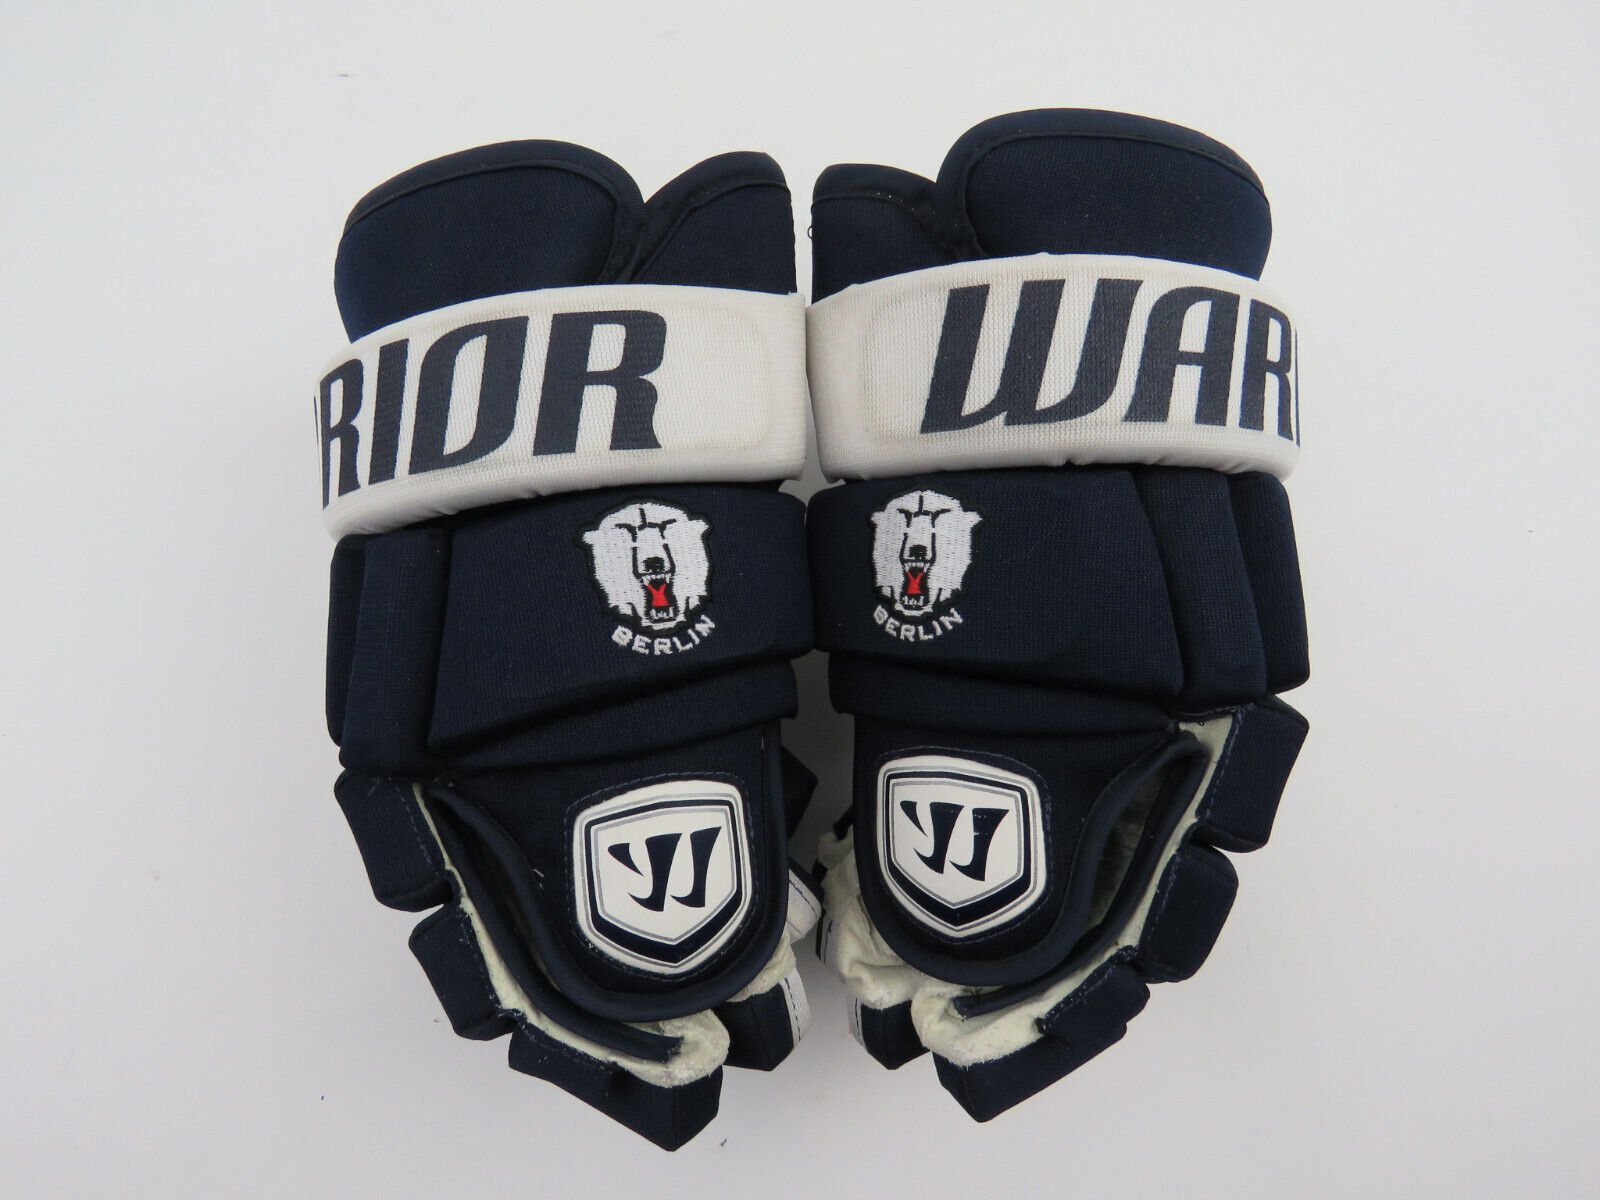 Warrior Franchise Eisbären Berlin Pro Stock Germany Hockey Player Gloves 14"